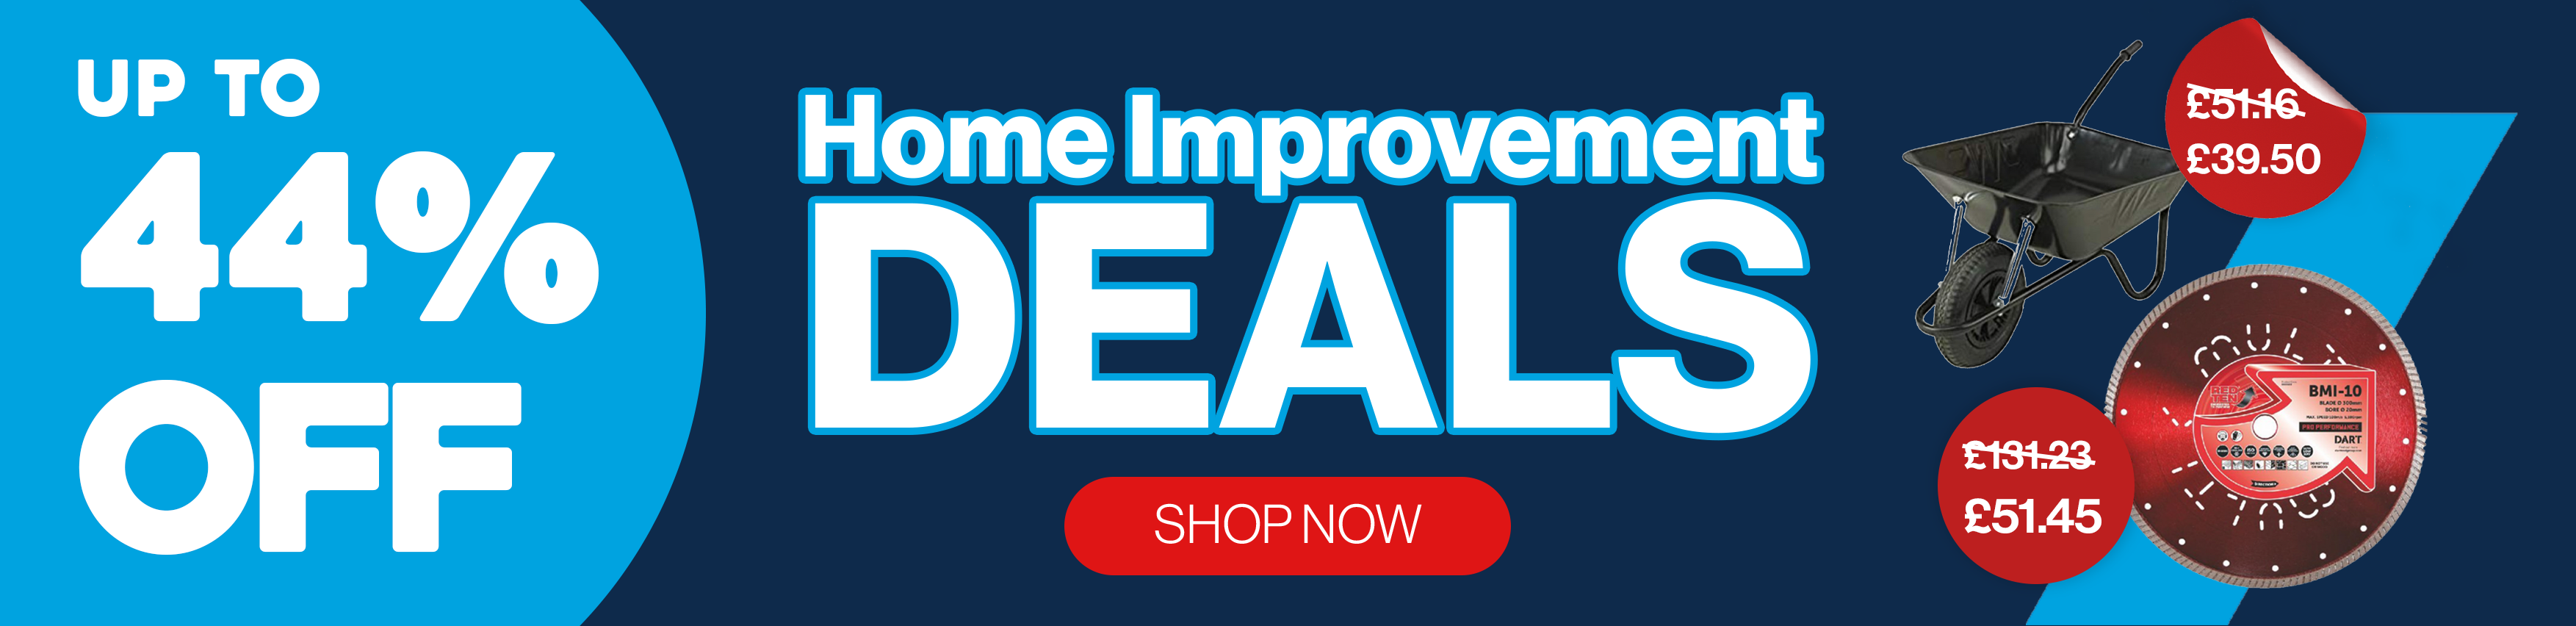 Home Improvement Deals up to 44% Off